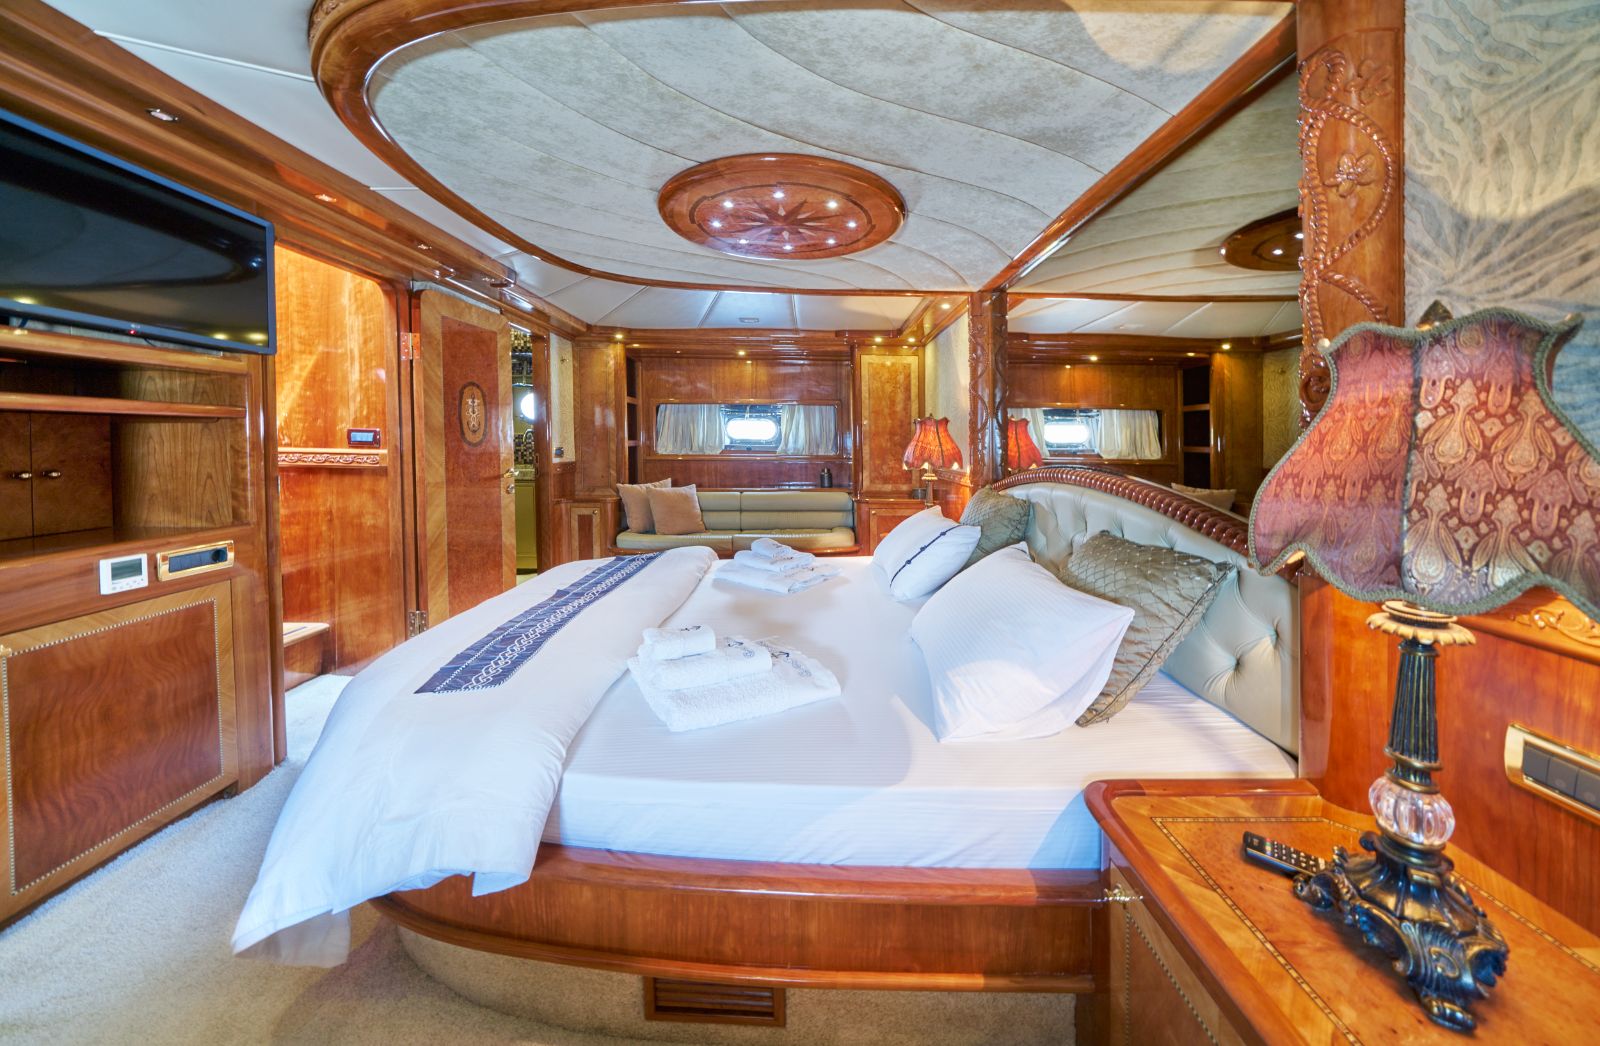 VIP cabin bedroom onboard the Lotus gulet in Croatia